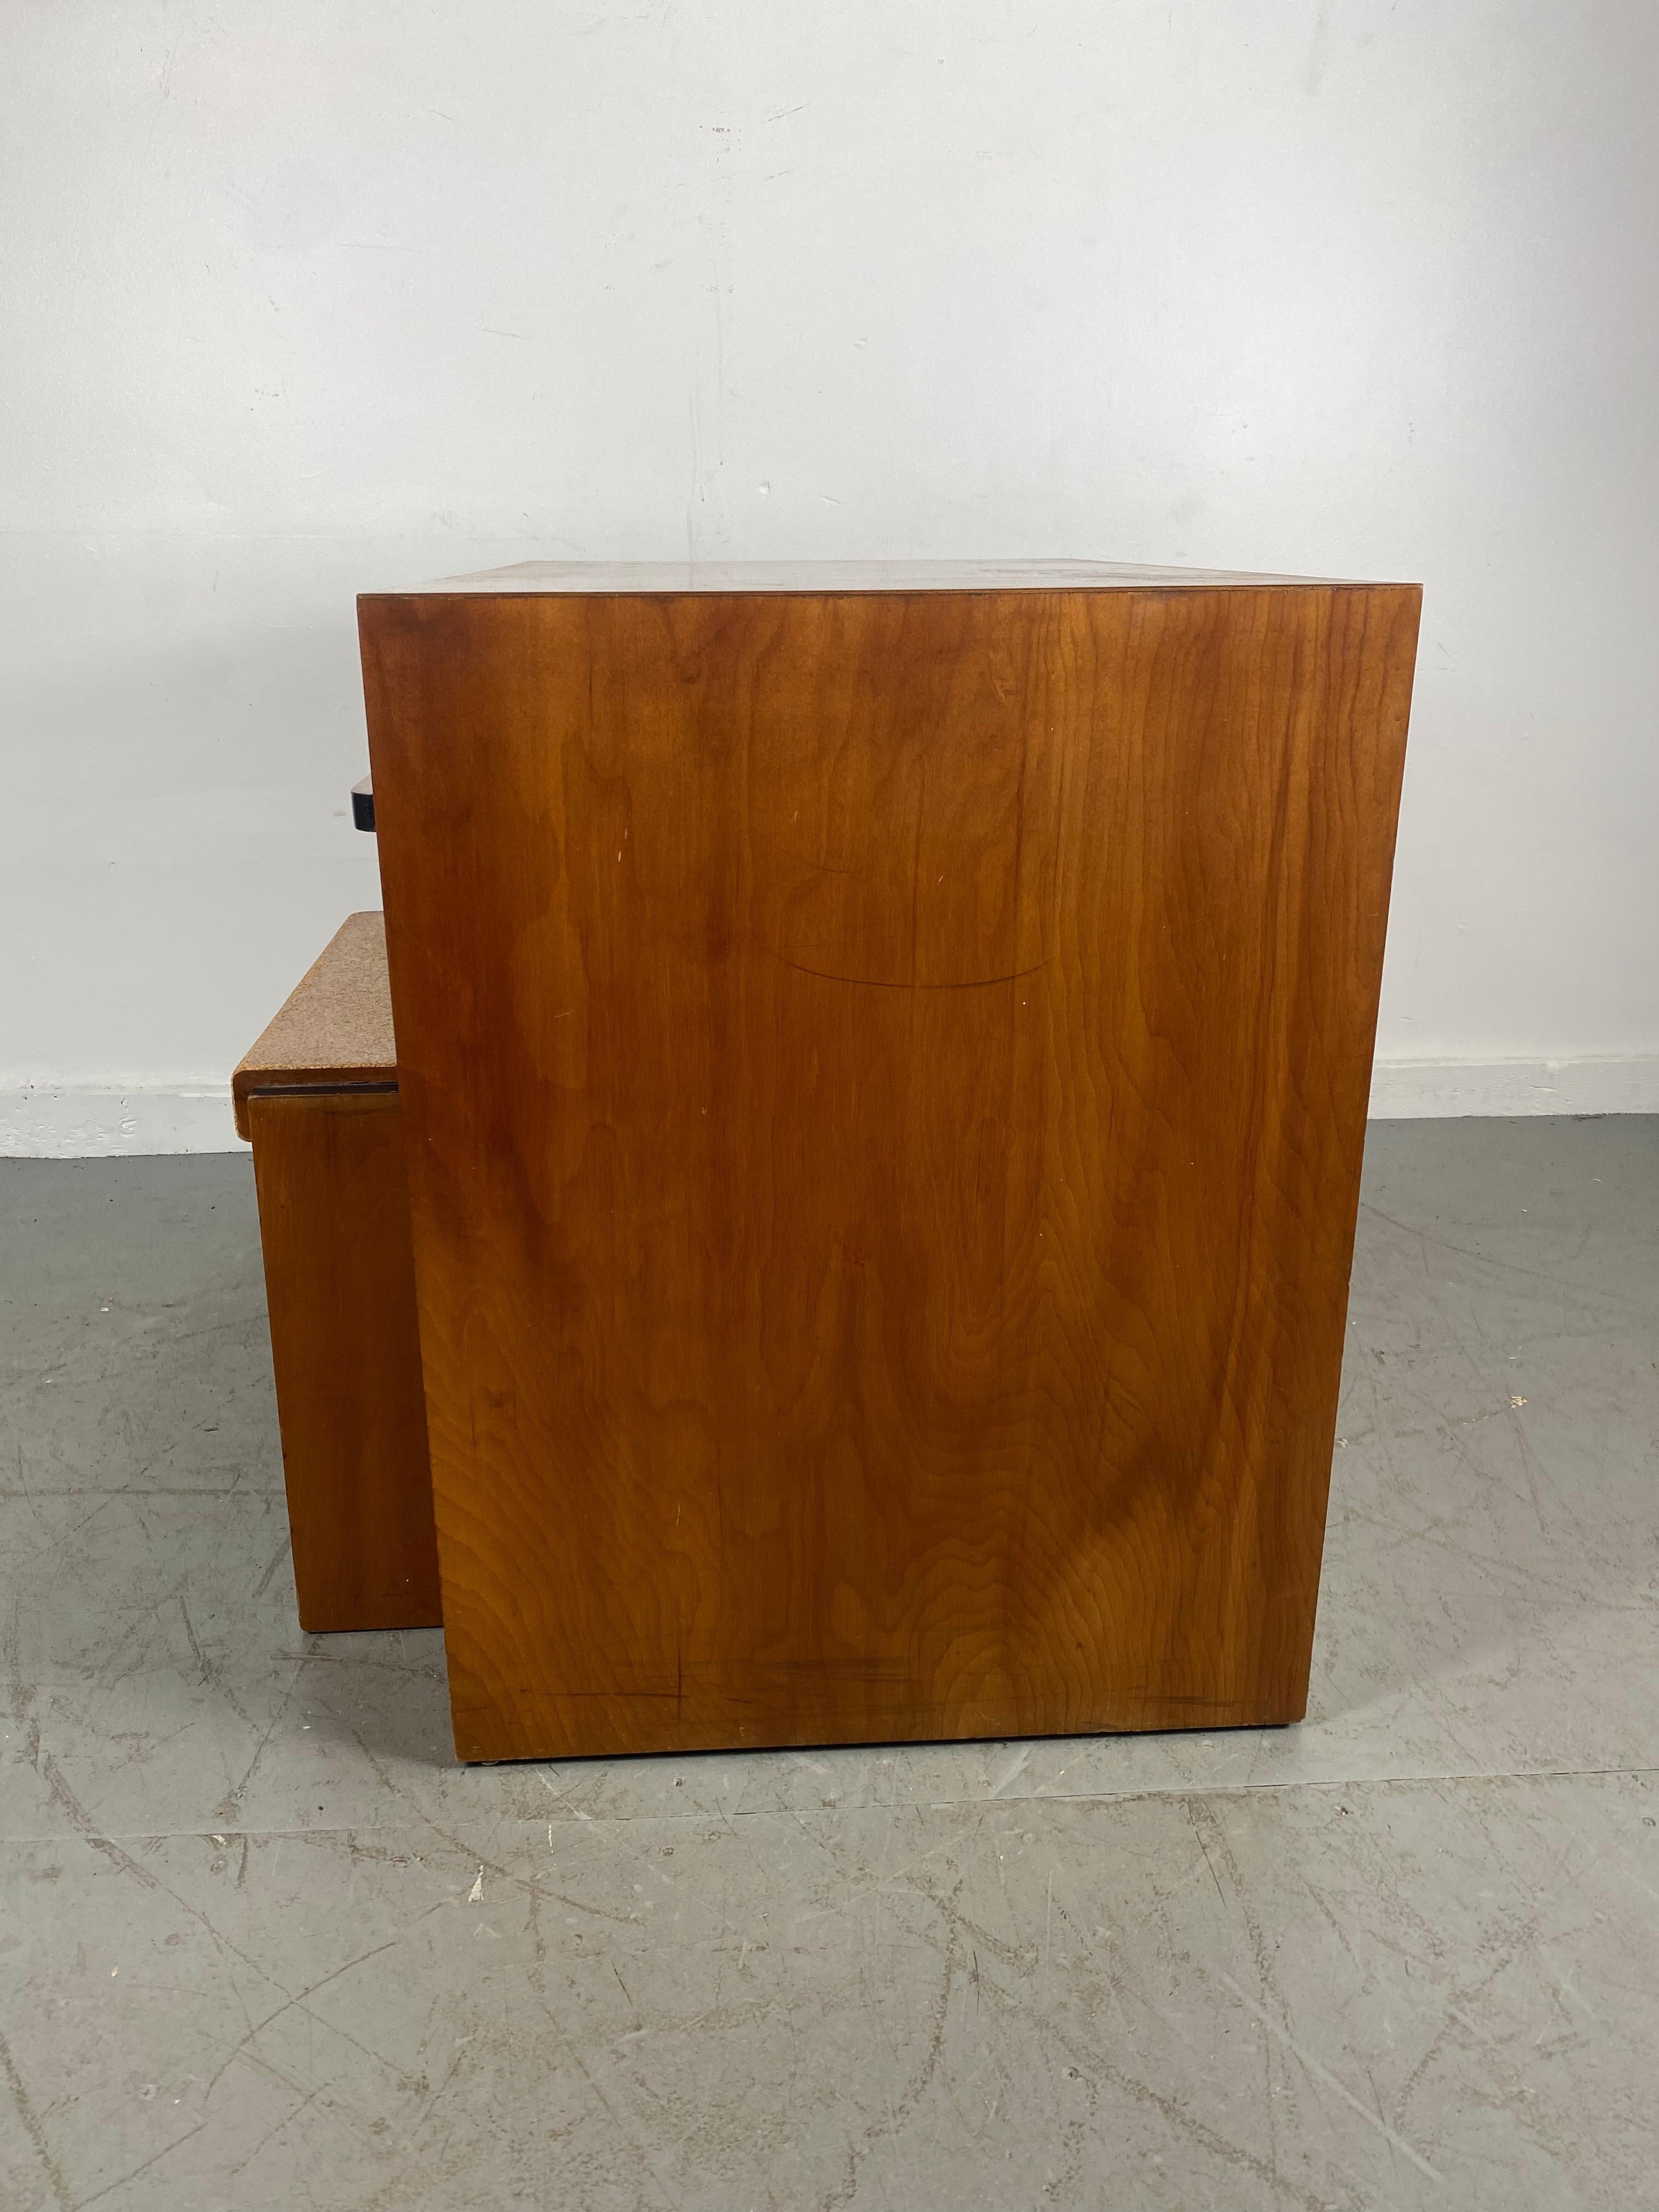 Rare Paul Frankl Skyscraper Desk / Bench, Art Deco, Modernist, Cubist In Good Condition For Sale In Buffalo, NY